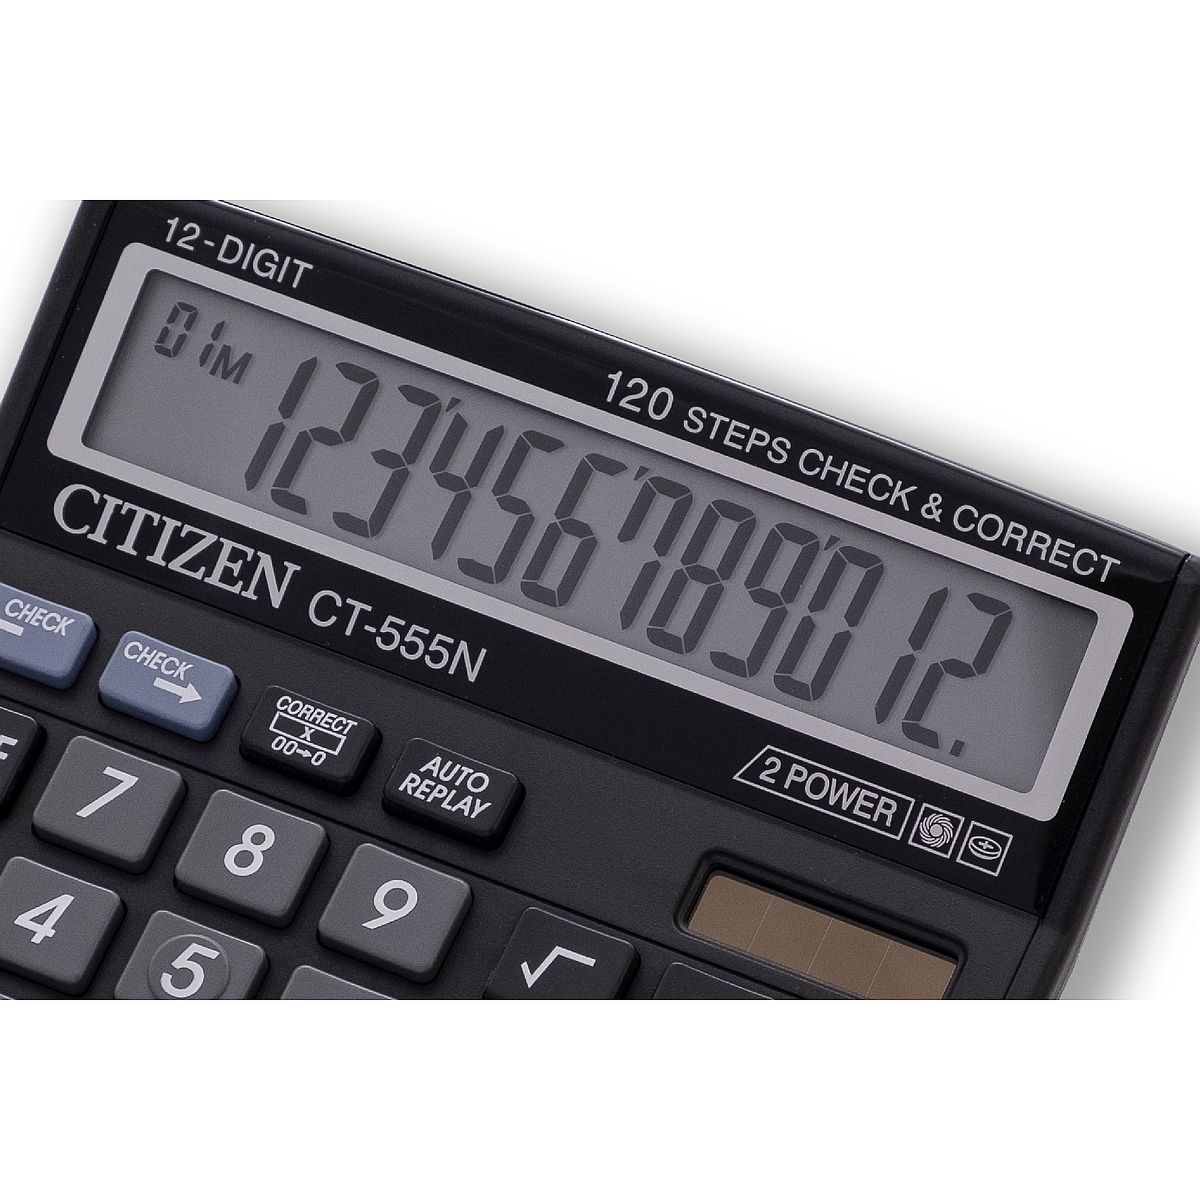 Kalkulator na biurko Citizen (CT666N)